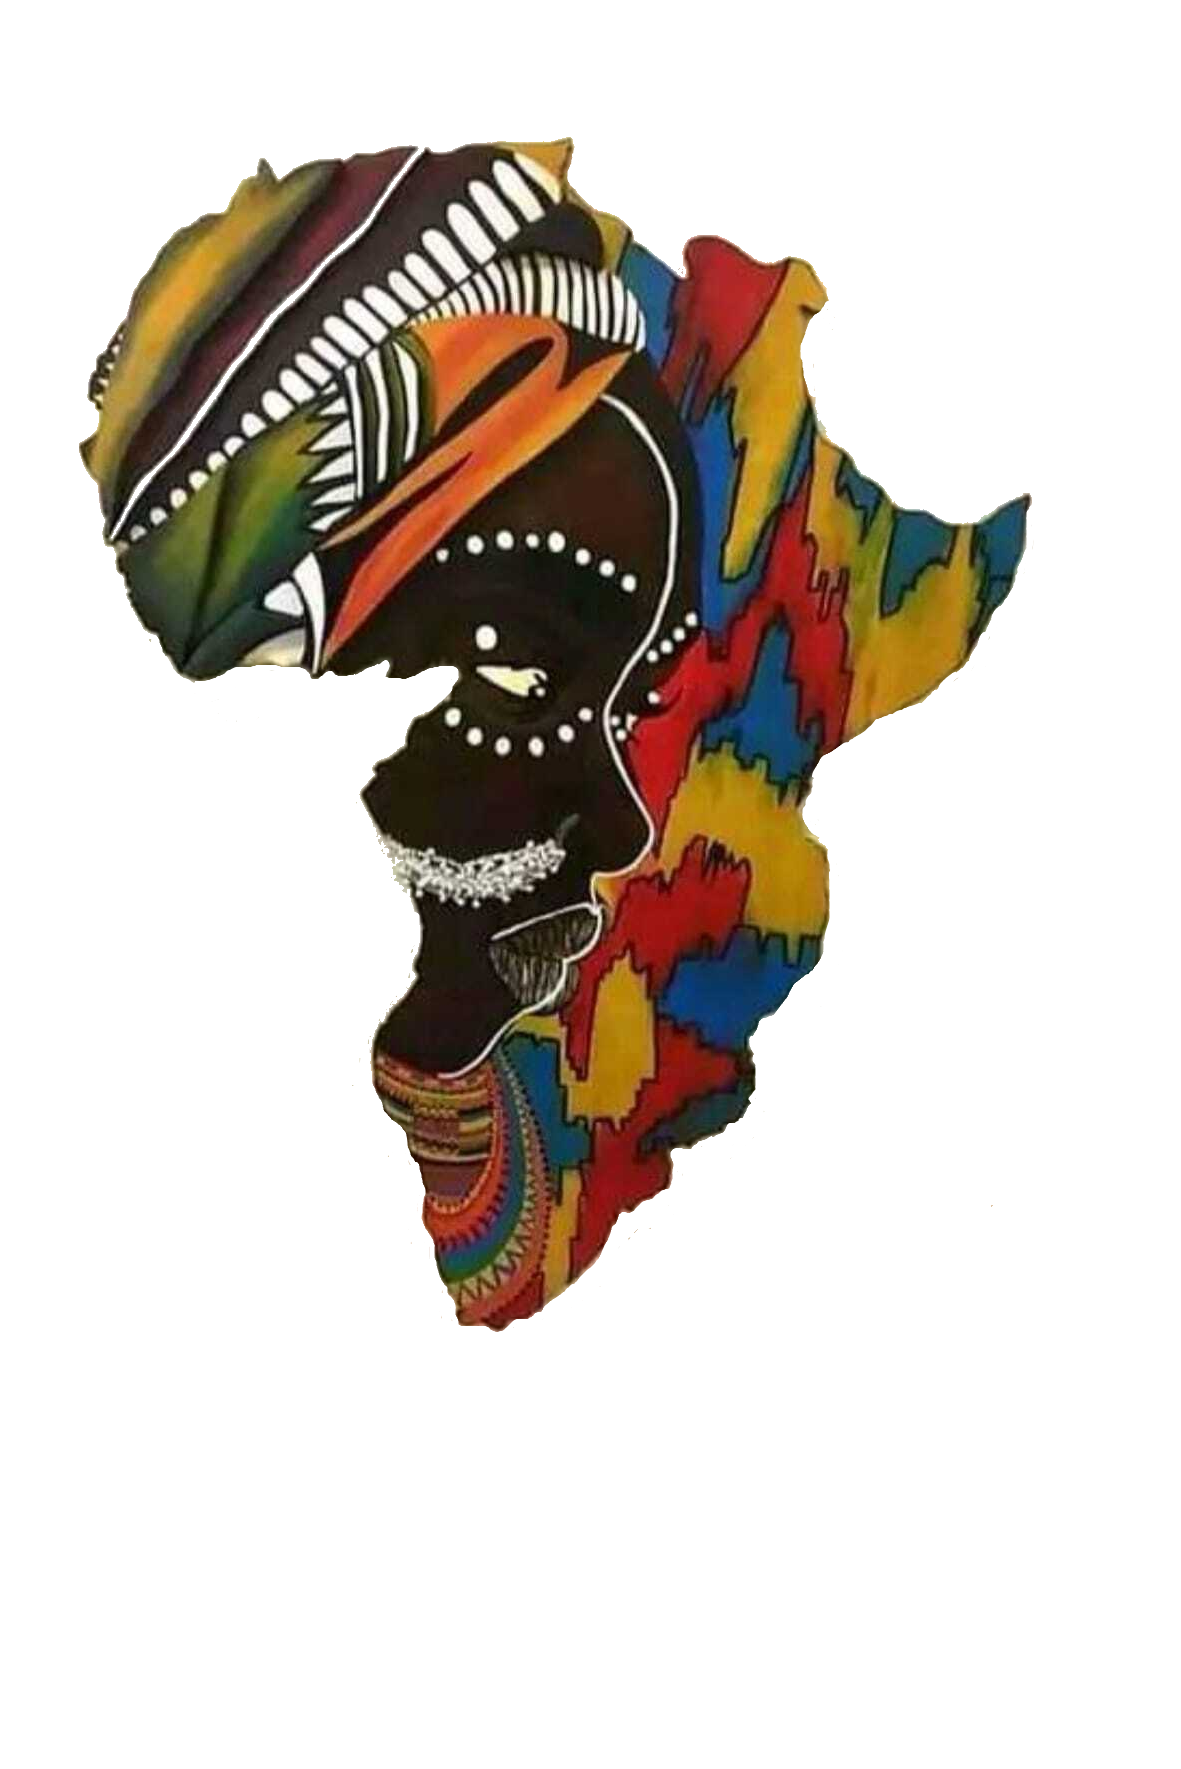 Nemburis Safari Tours